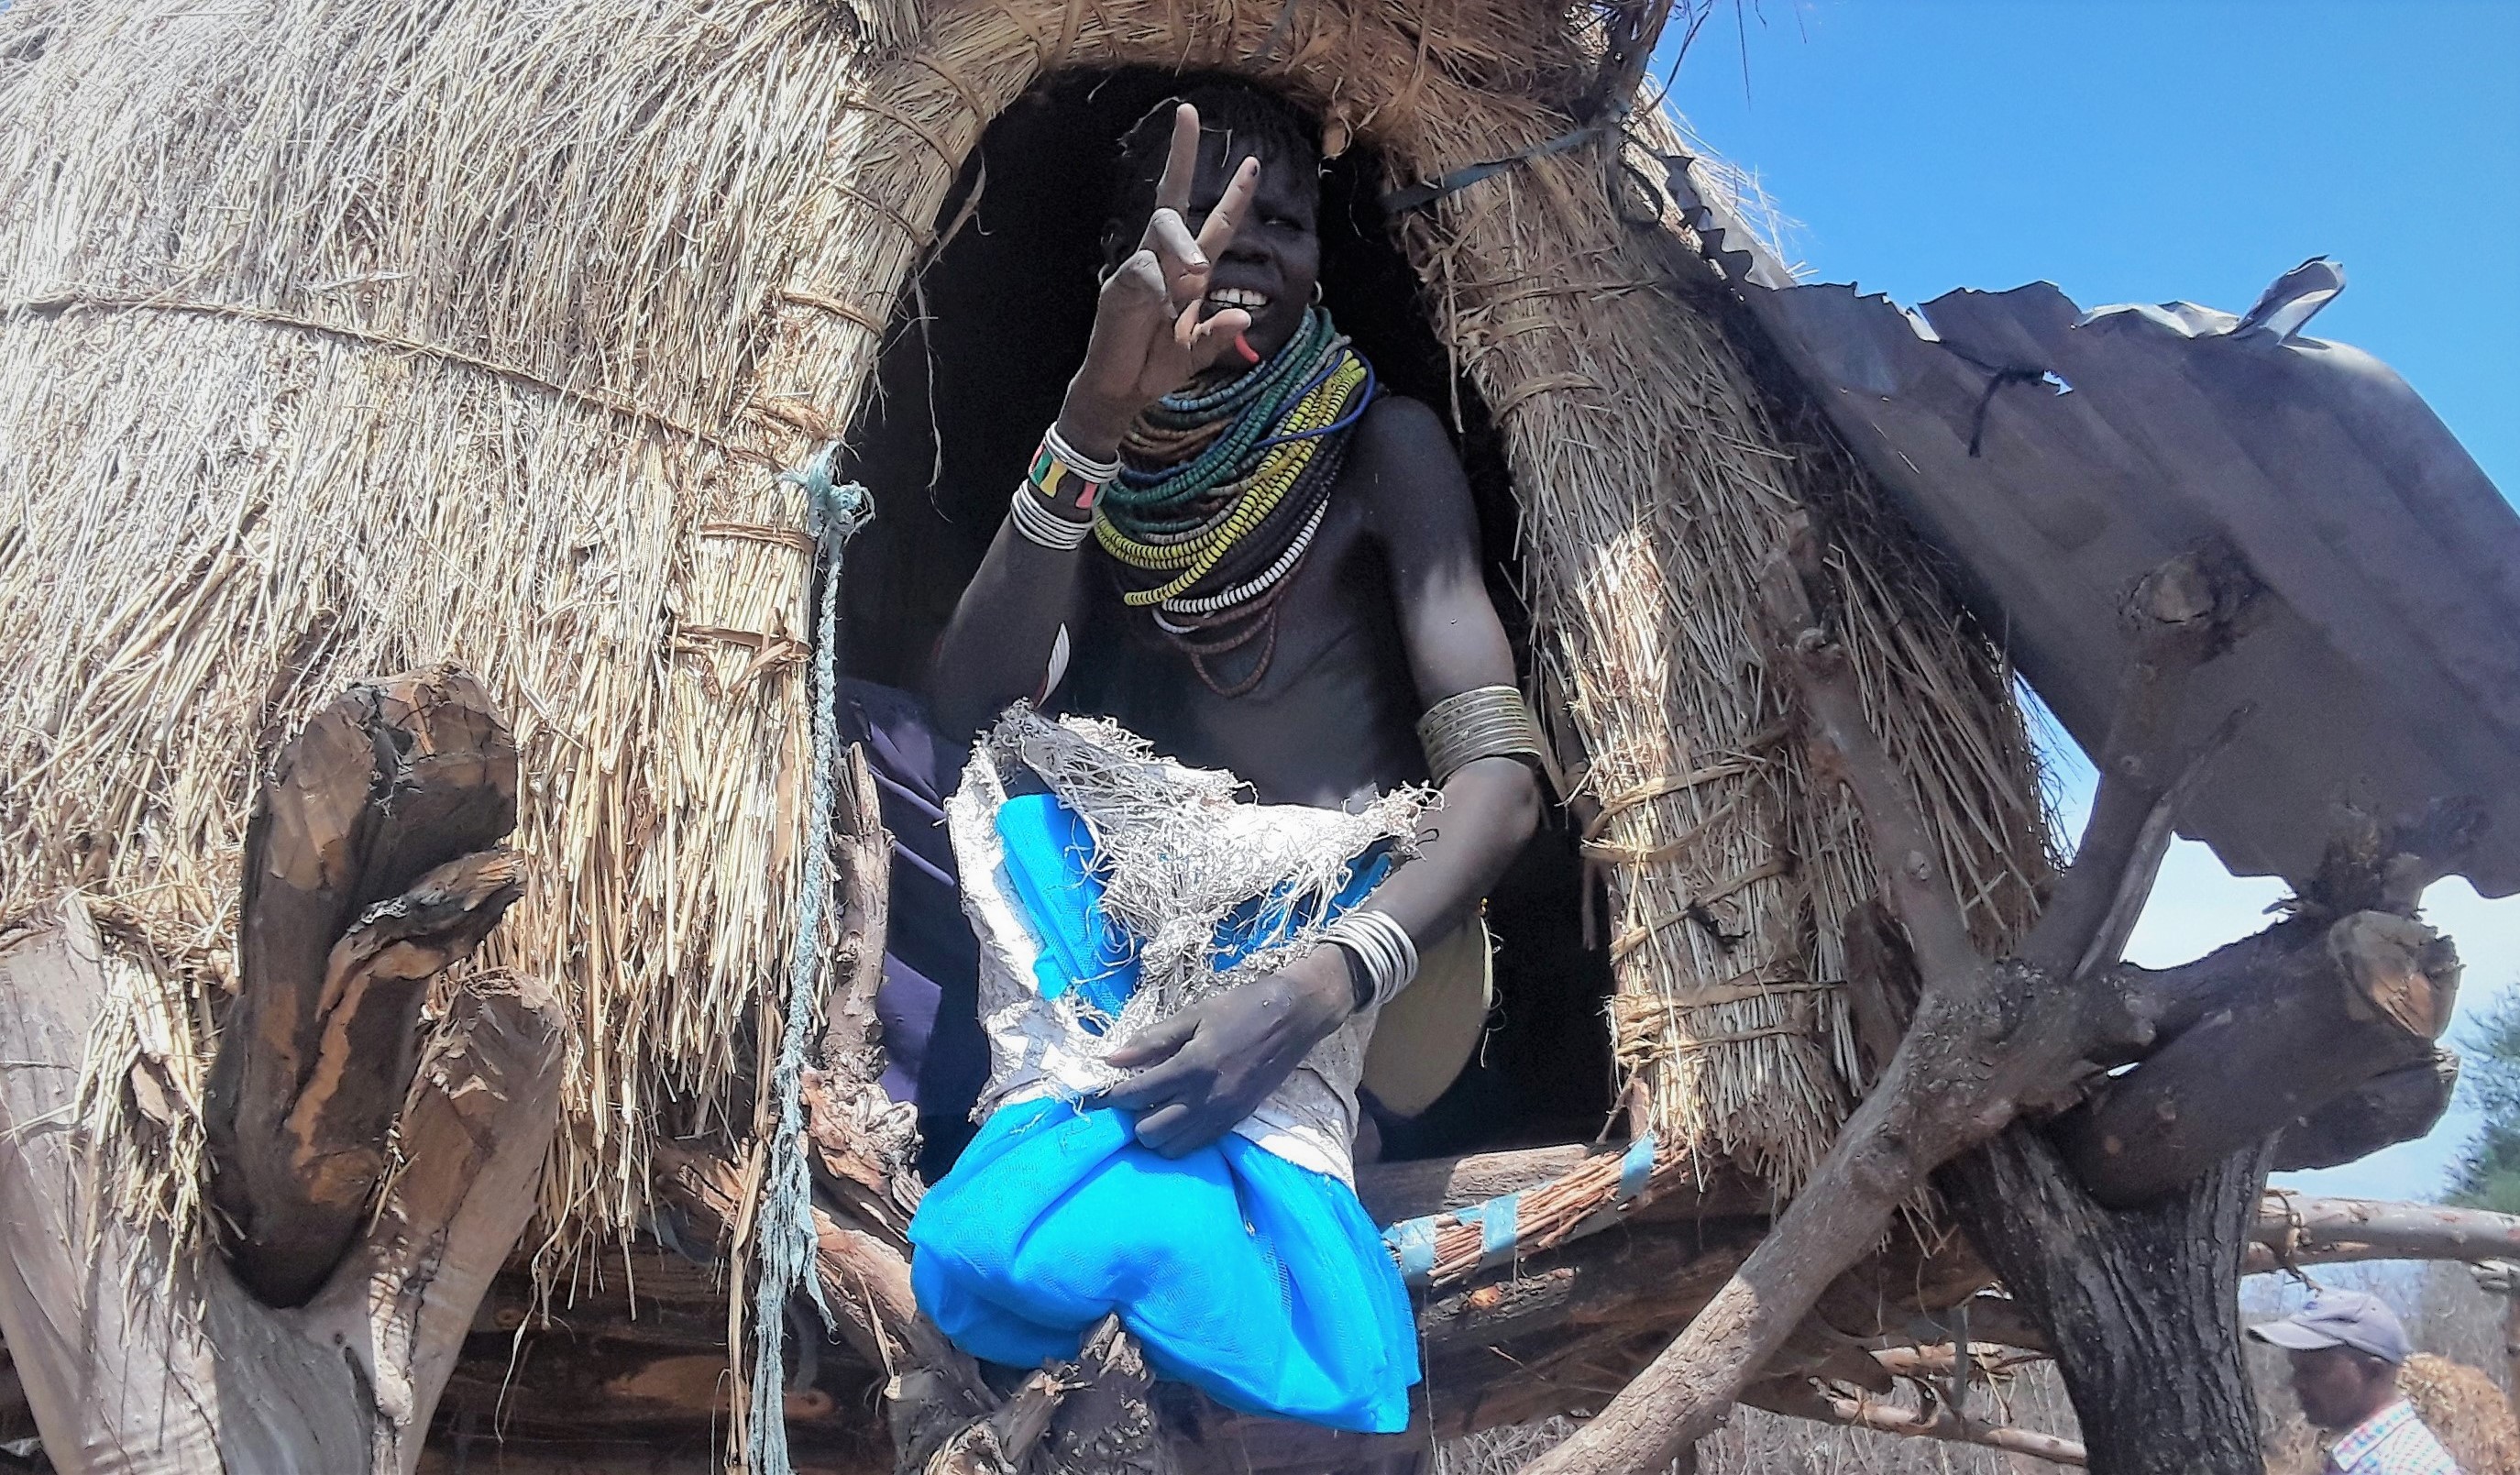 Man sits in home in rural Ethiopia